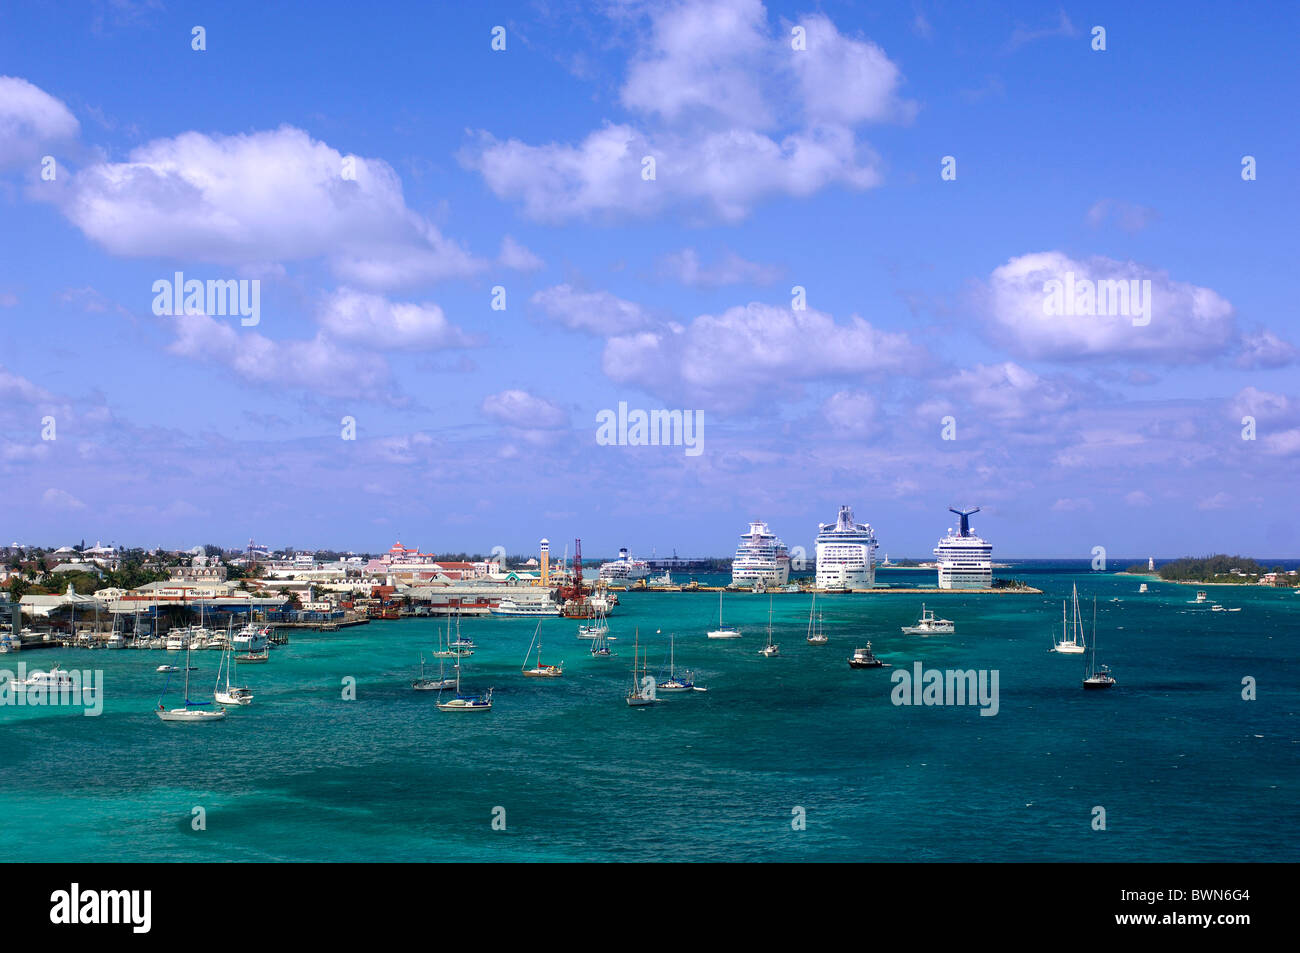 Bahamas-Kreuzfahrt-Schiff Hafen Nassau Karibik Schiffe Kreuzer Kreuzer Cruise Liner Schiff Hafen Hafen hohe ang Stockfoto